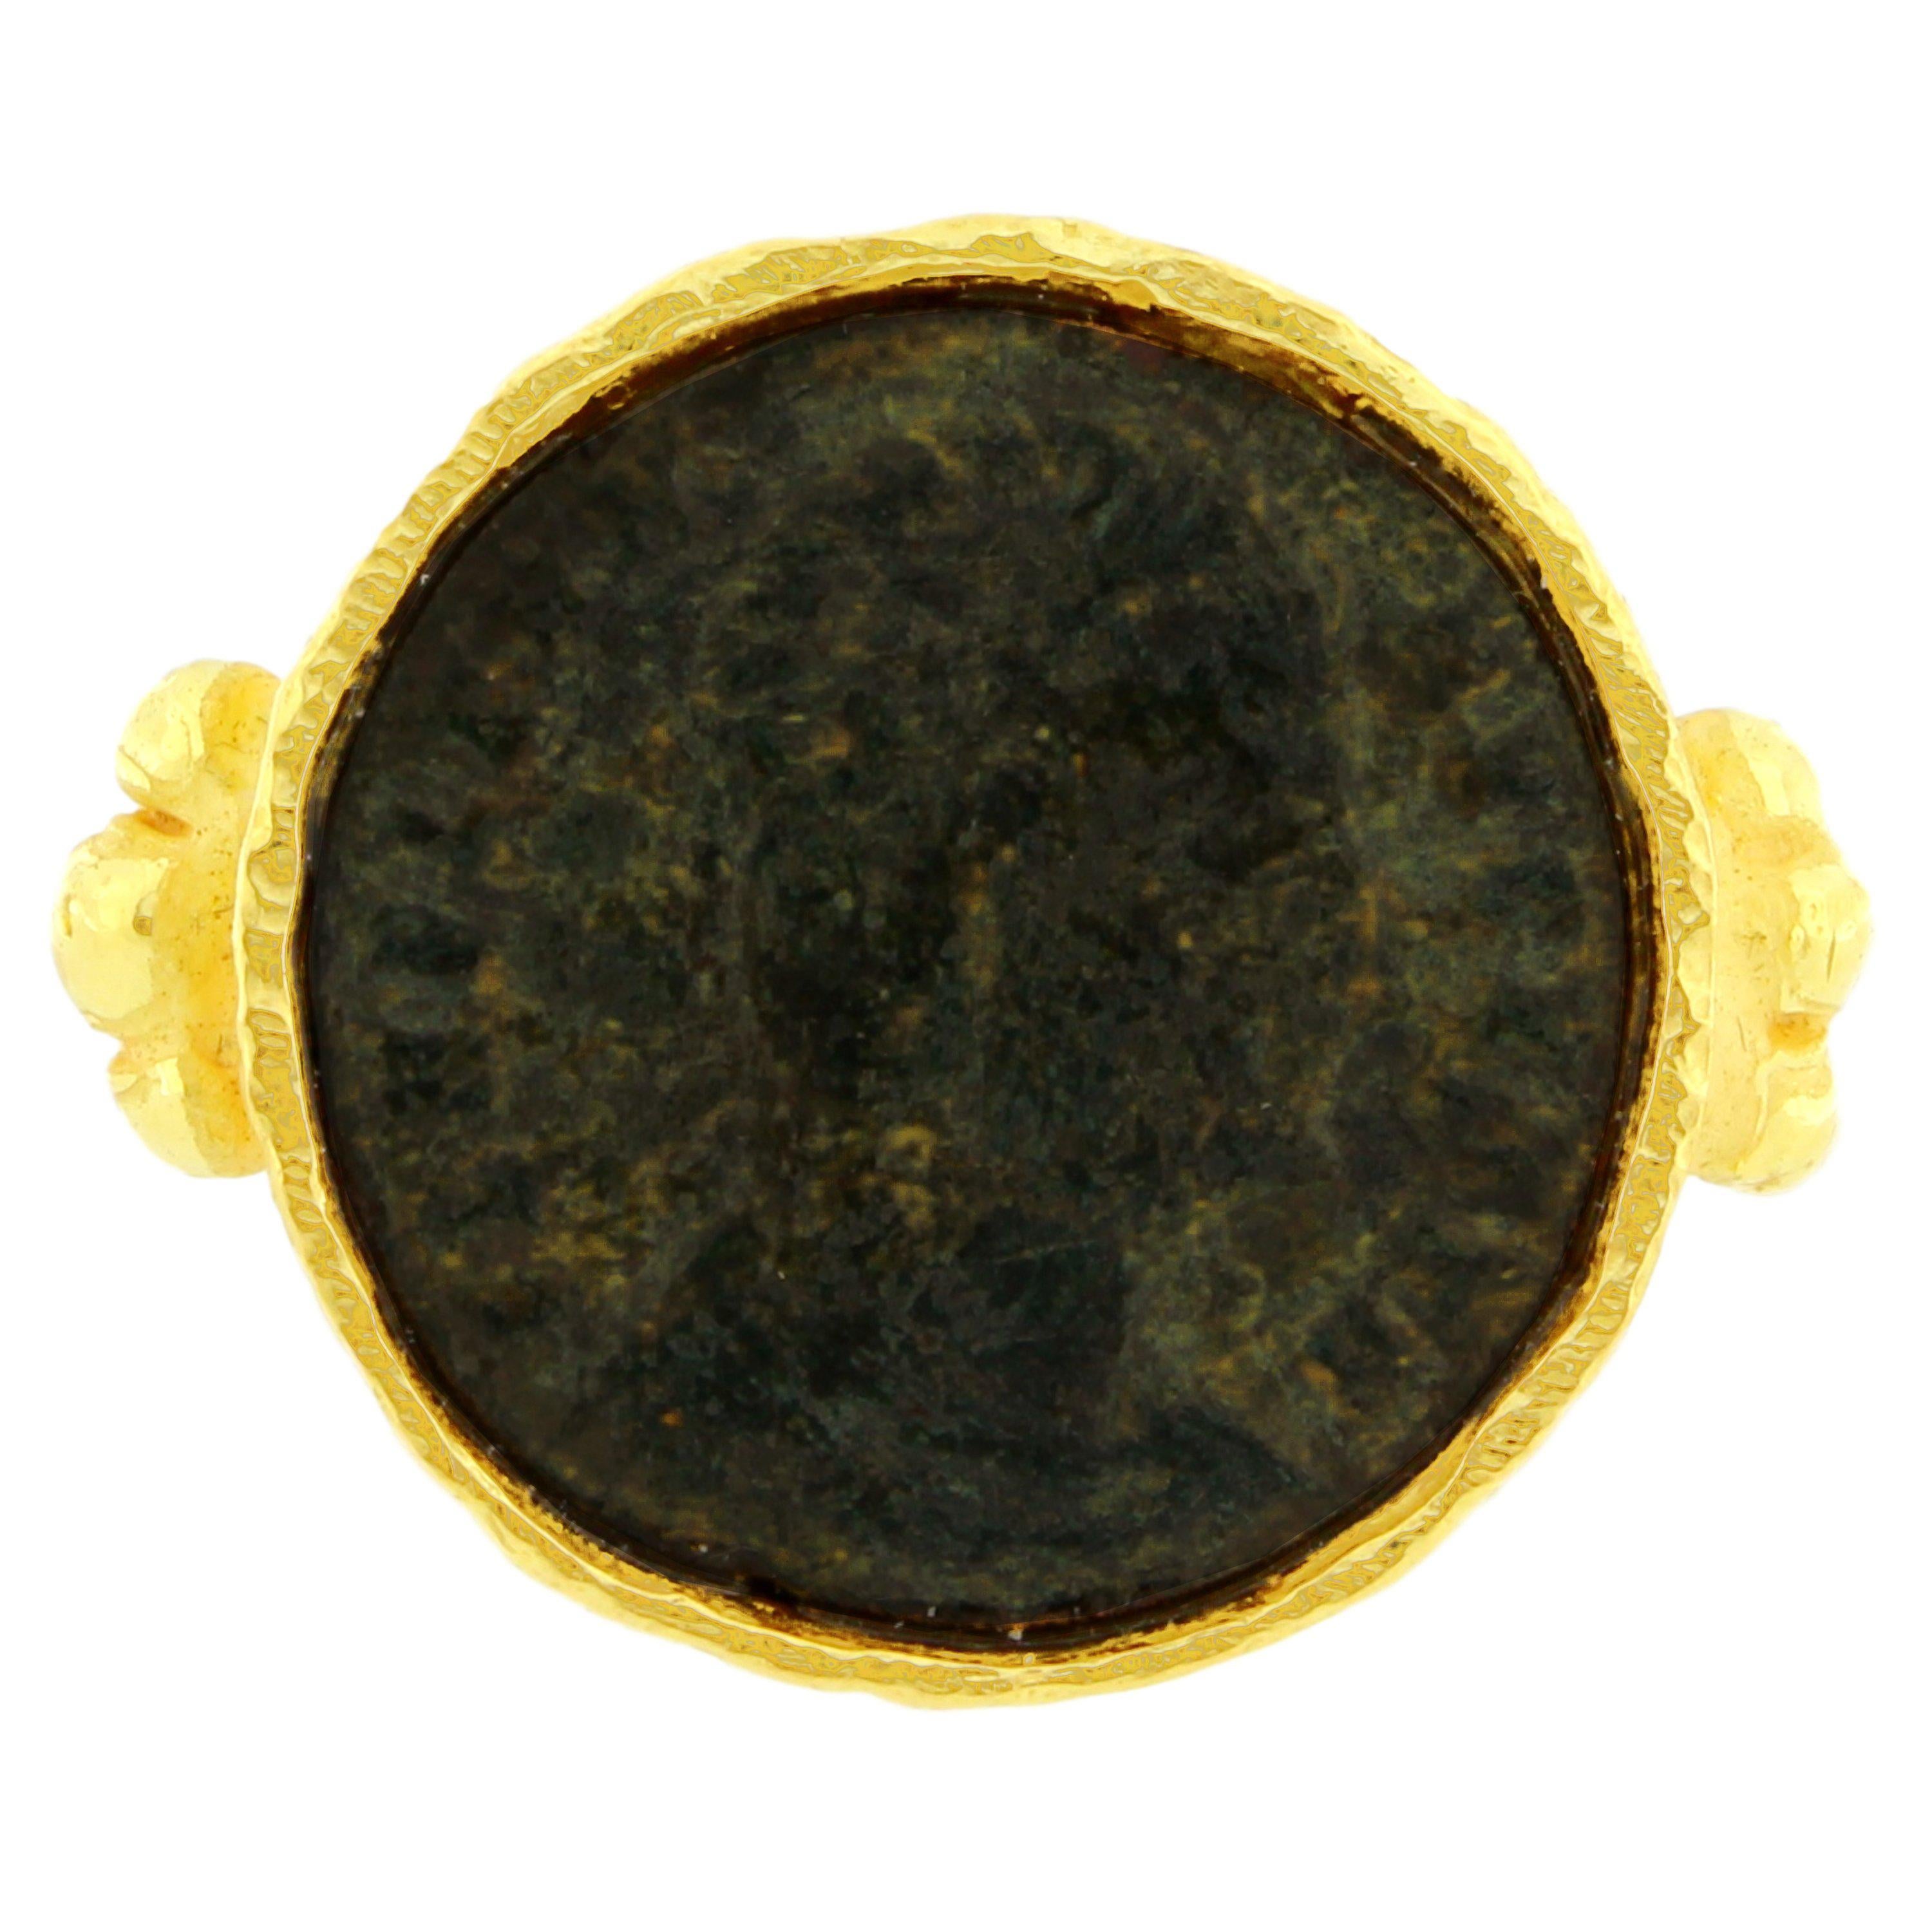 Sacchi Antique Roman Coin Ring 18 Karat Yellow Gold